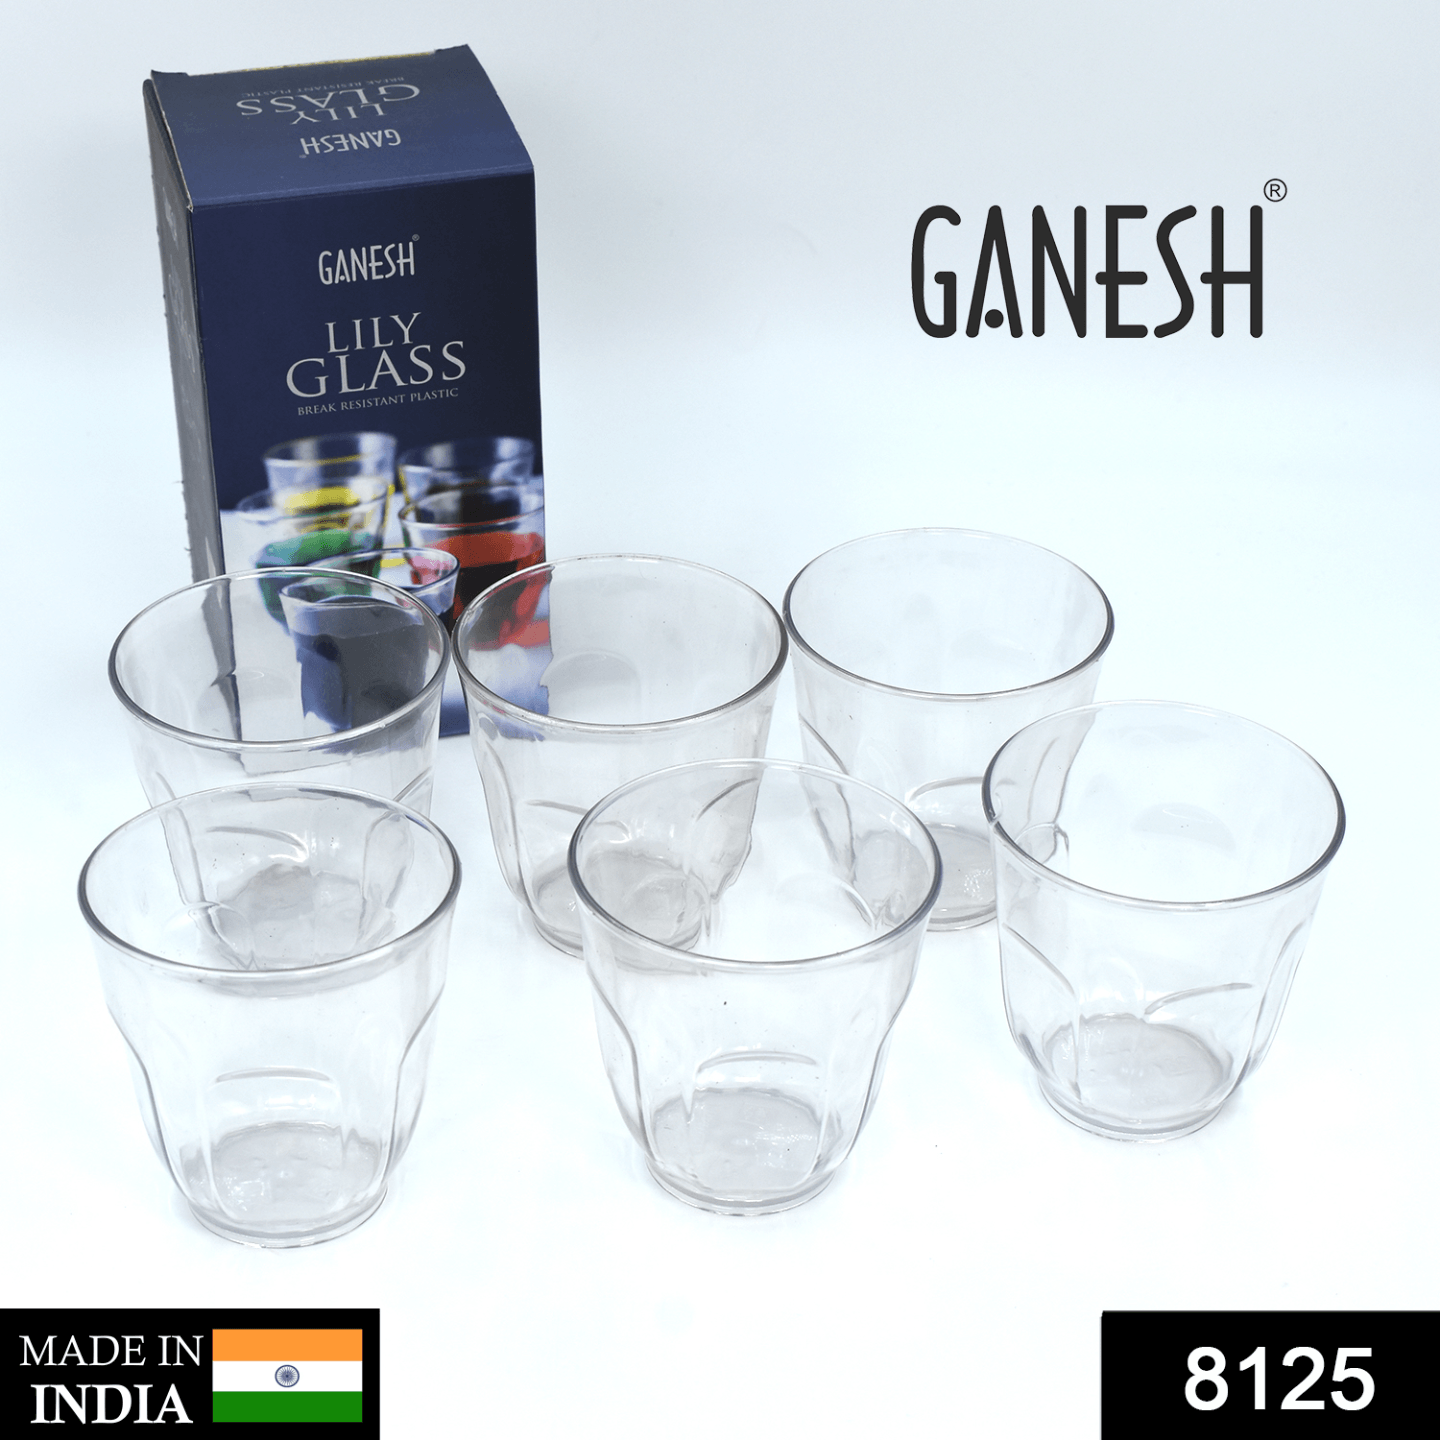 Ganesh Lily Glass Break resistant Set Of 6